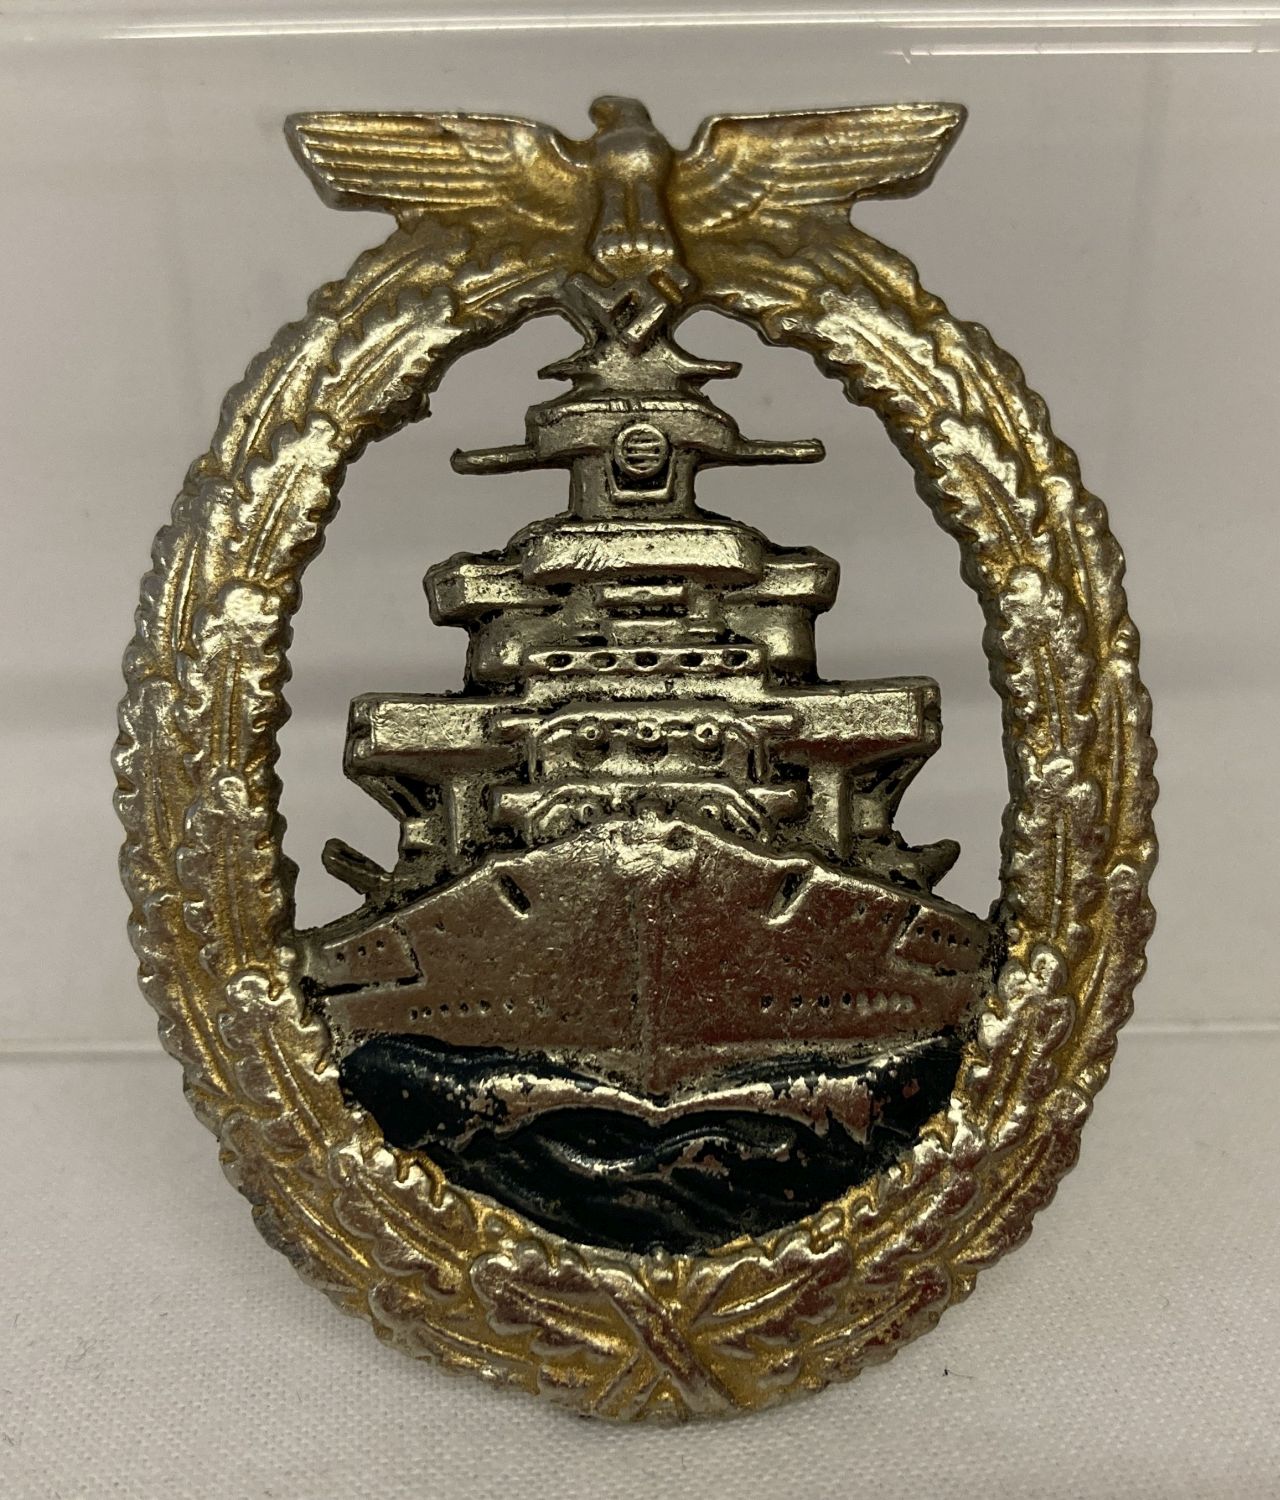 A WWII style German Kreigsmarine high seas fleet badge.